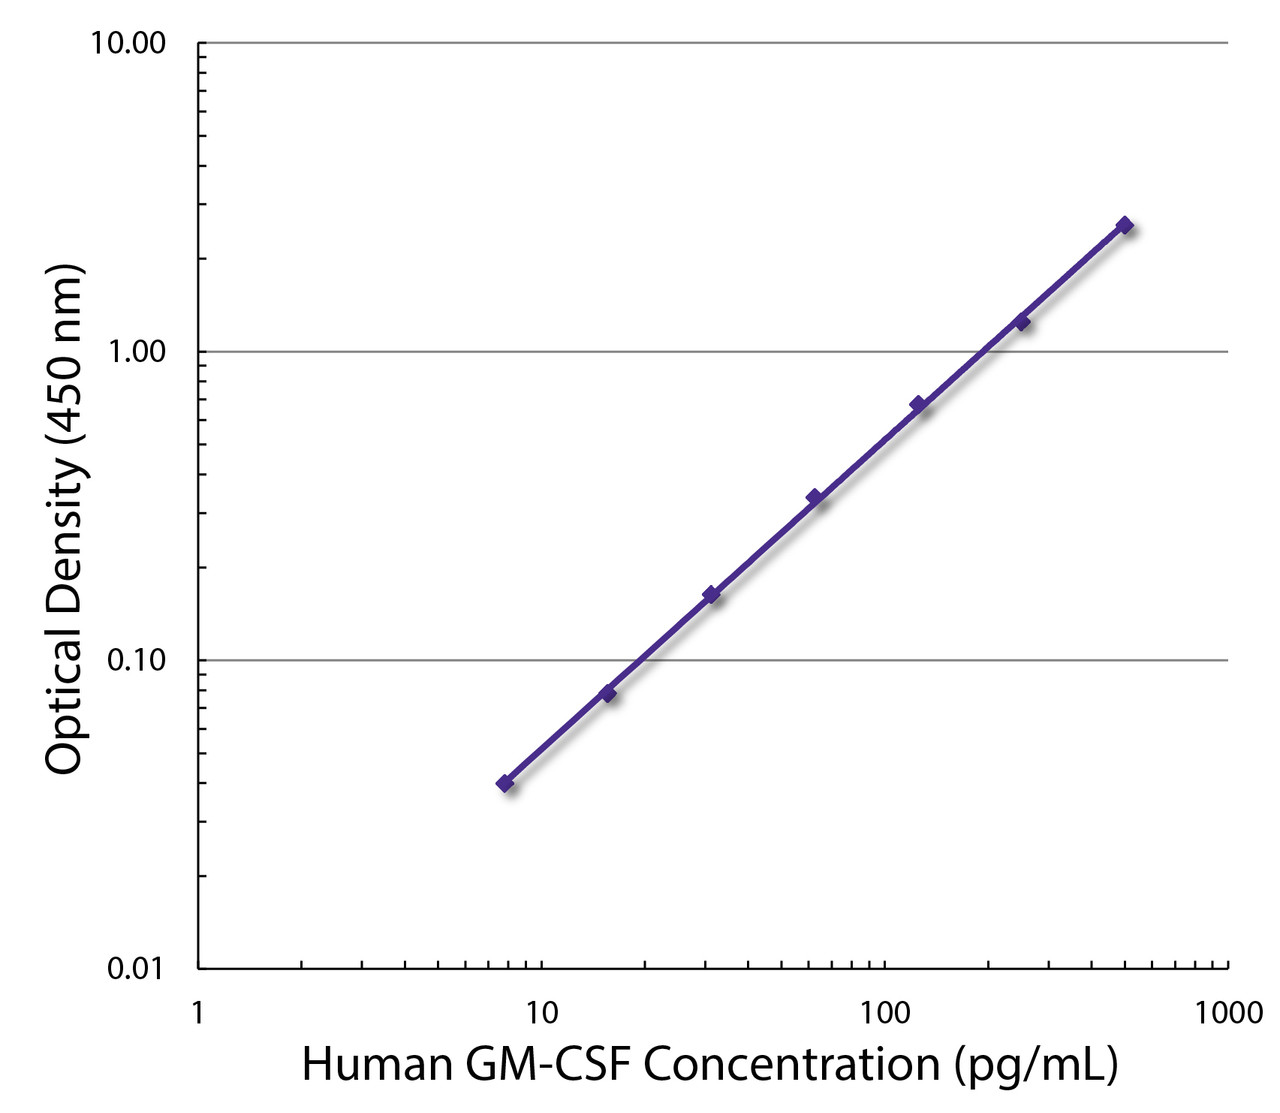 Standard curve generated with Rat Anti-Human GM-CSF-UNLB (Cat. No. 10111-01; Clone BVD2-23B6) and Rat Anti-Human GM-CSF-BIOT (Cat. No. 99-642; Clone BVD2-21C11) followed by Streptavidin-HRP